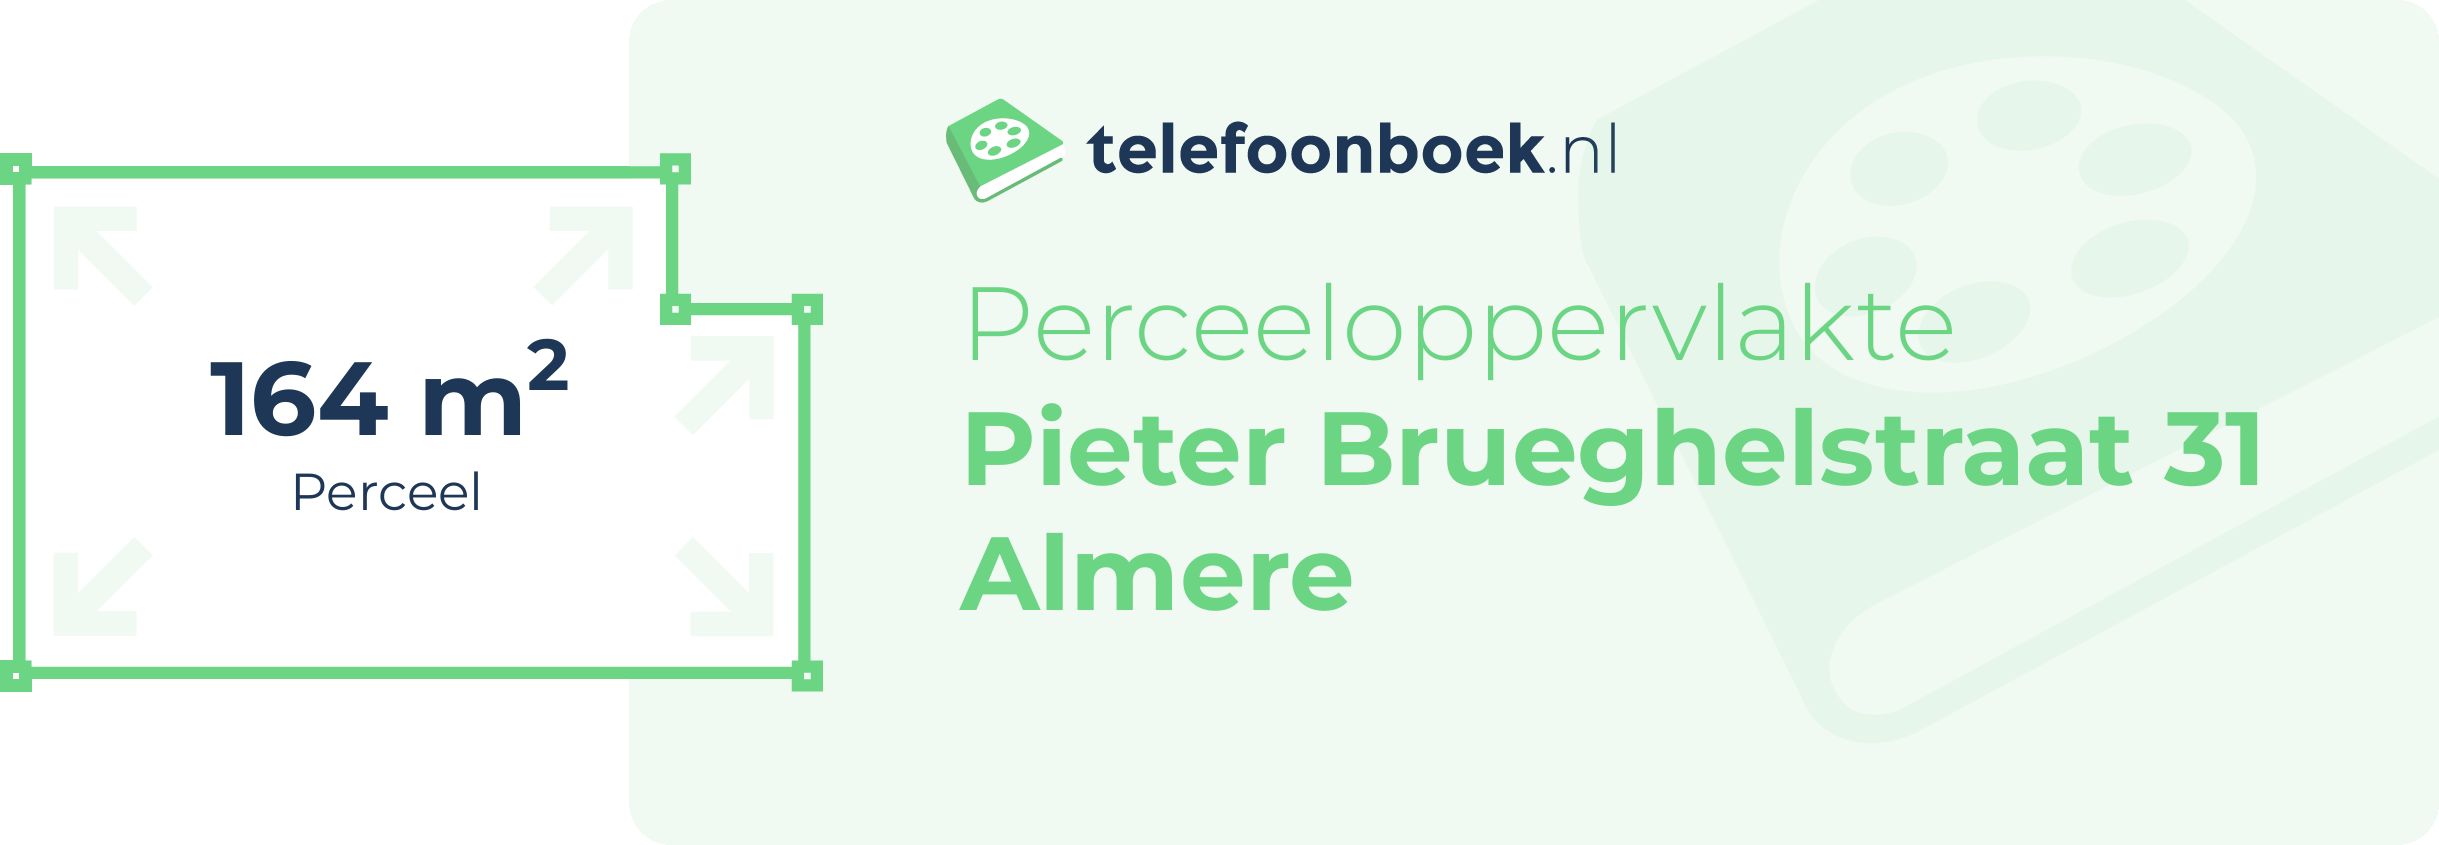 Perceeloppervlakte Pieter Brueghelstraat 31 Almere